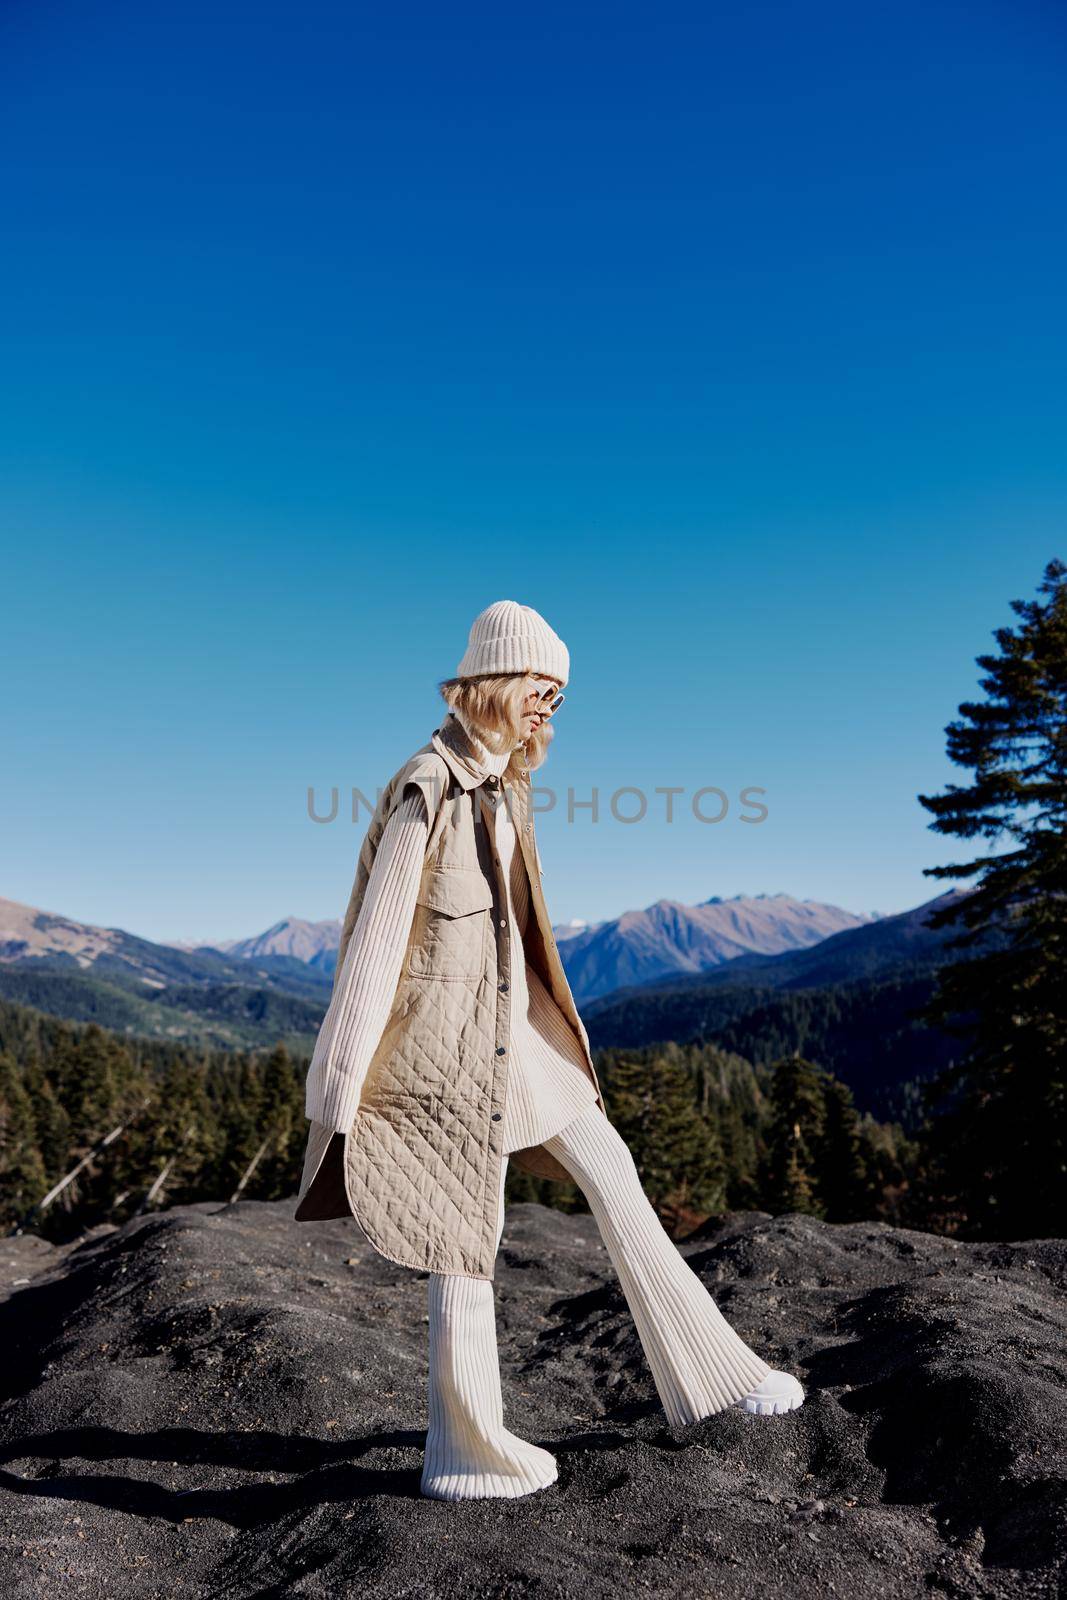 tourist fashion glasses mountain top nature freedom landscape. High quality photo